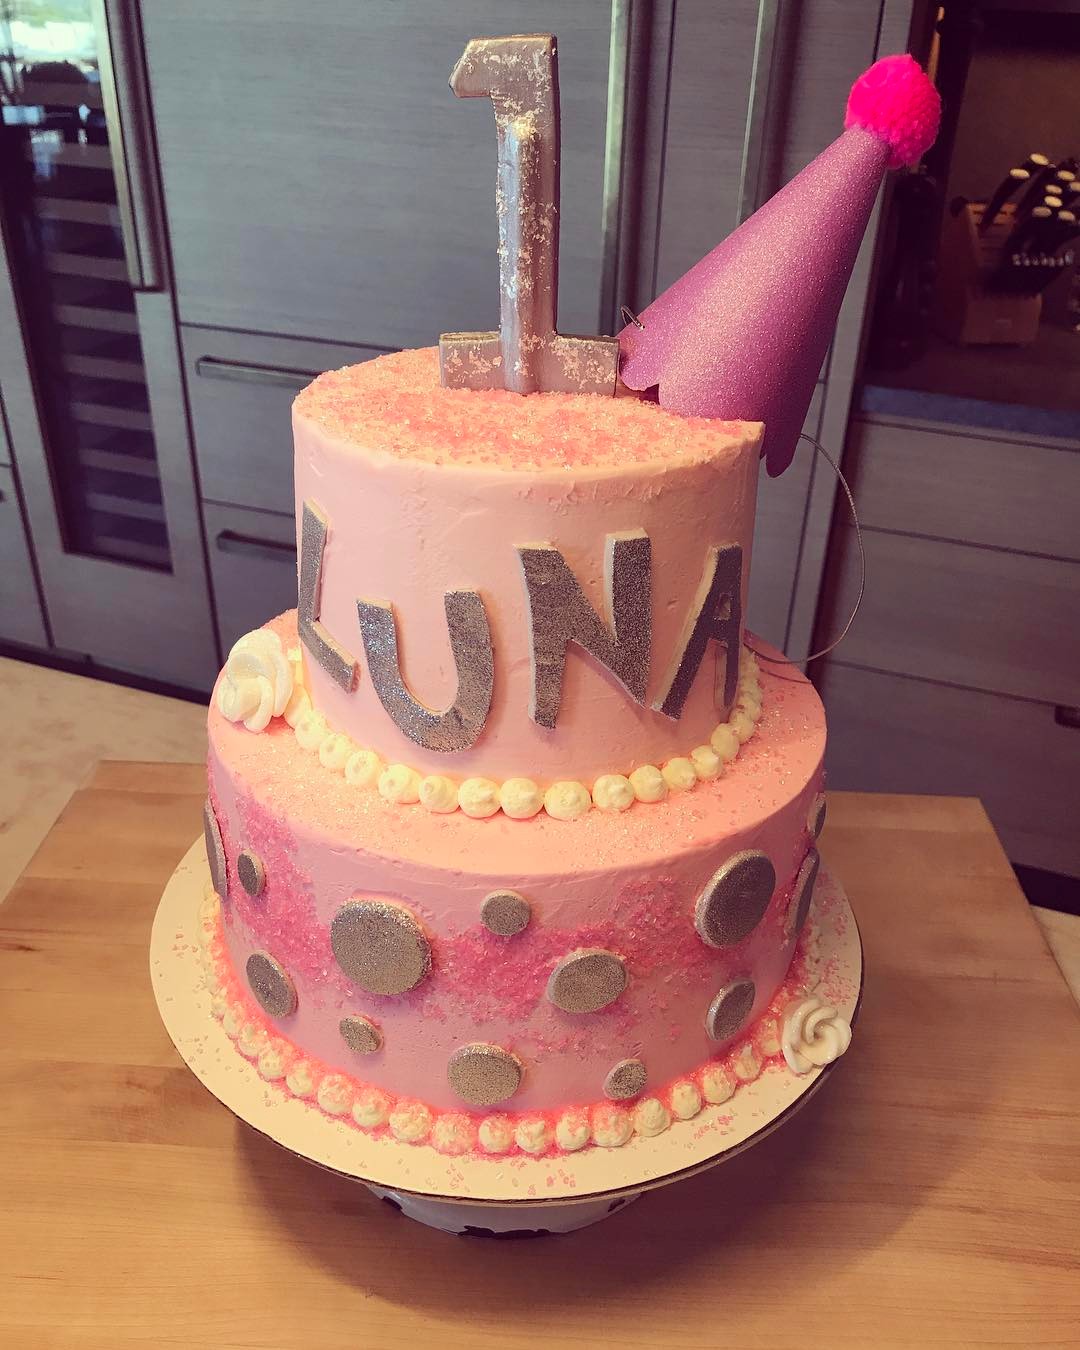 Chrissy Teigen And John Legend's Daughter Luna Enjoyed Her Birthday As She Clocked 1 - 1